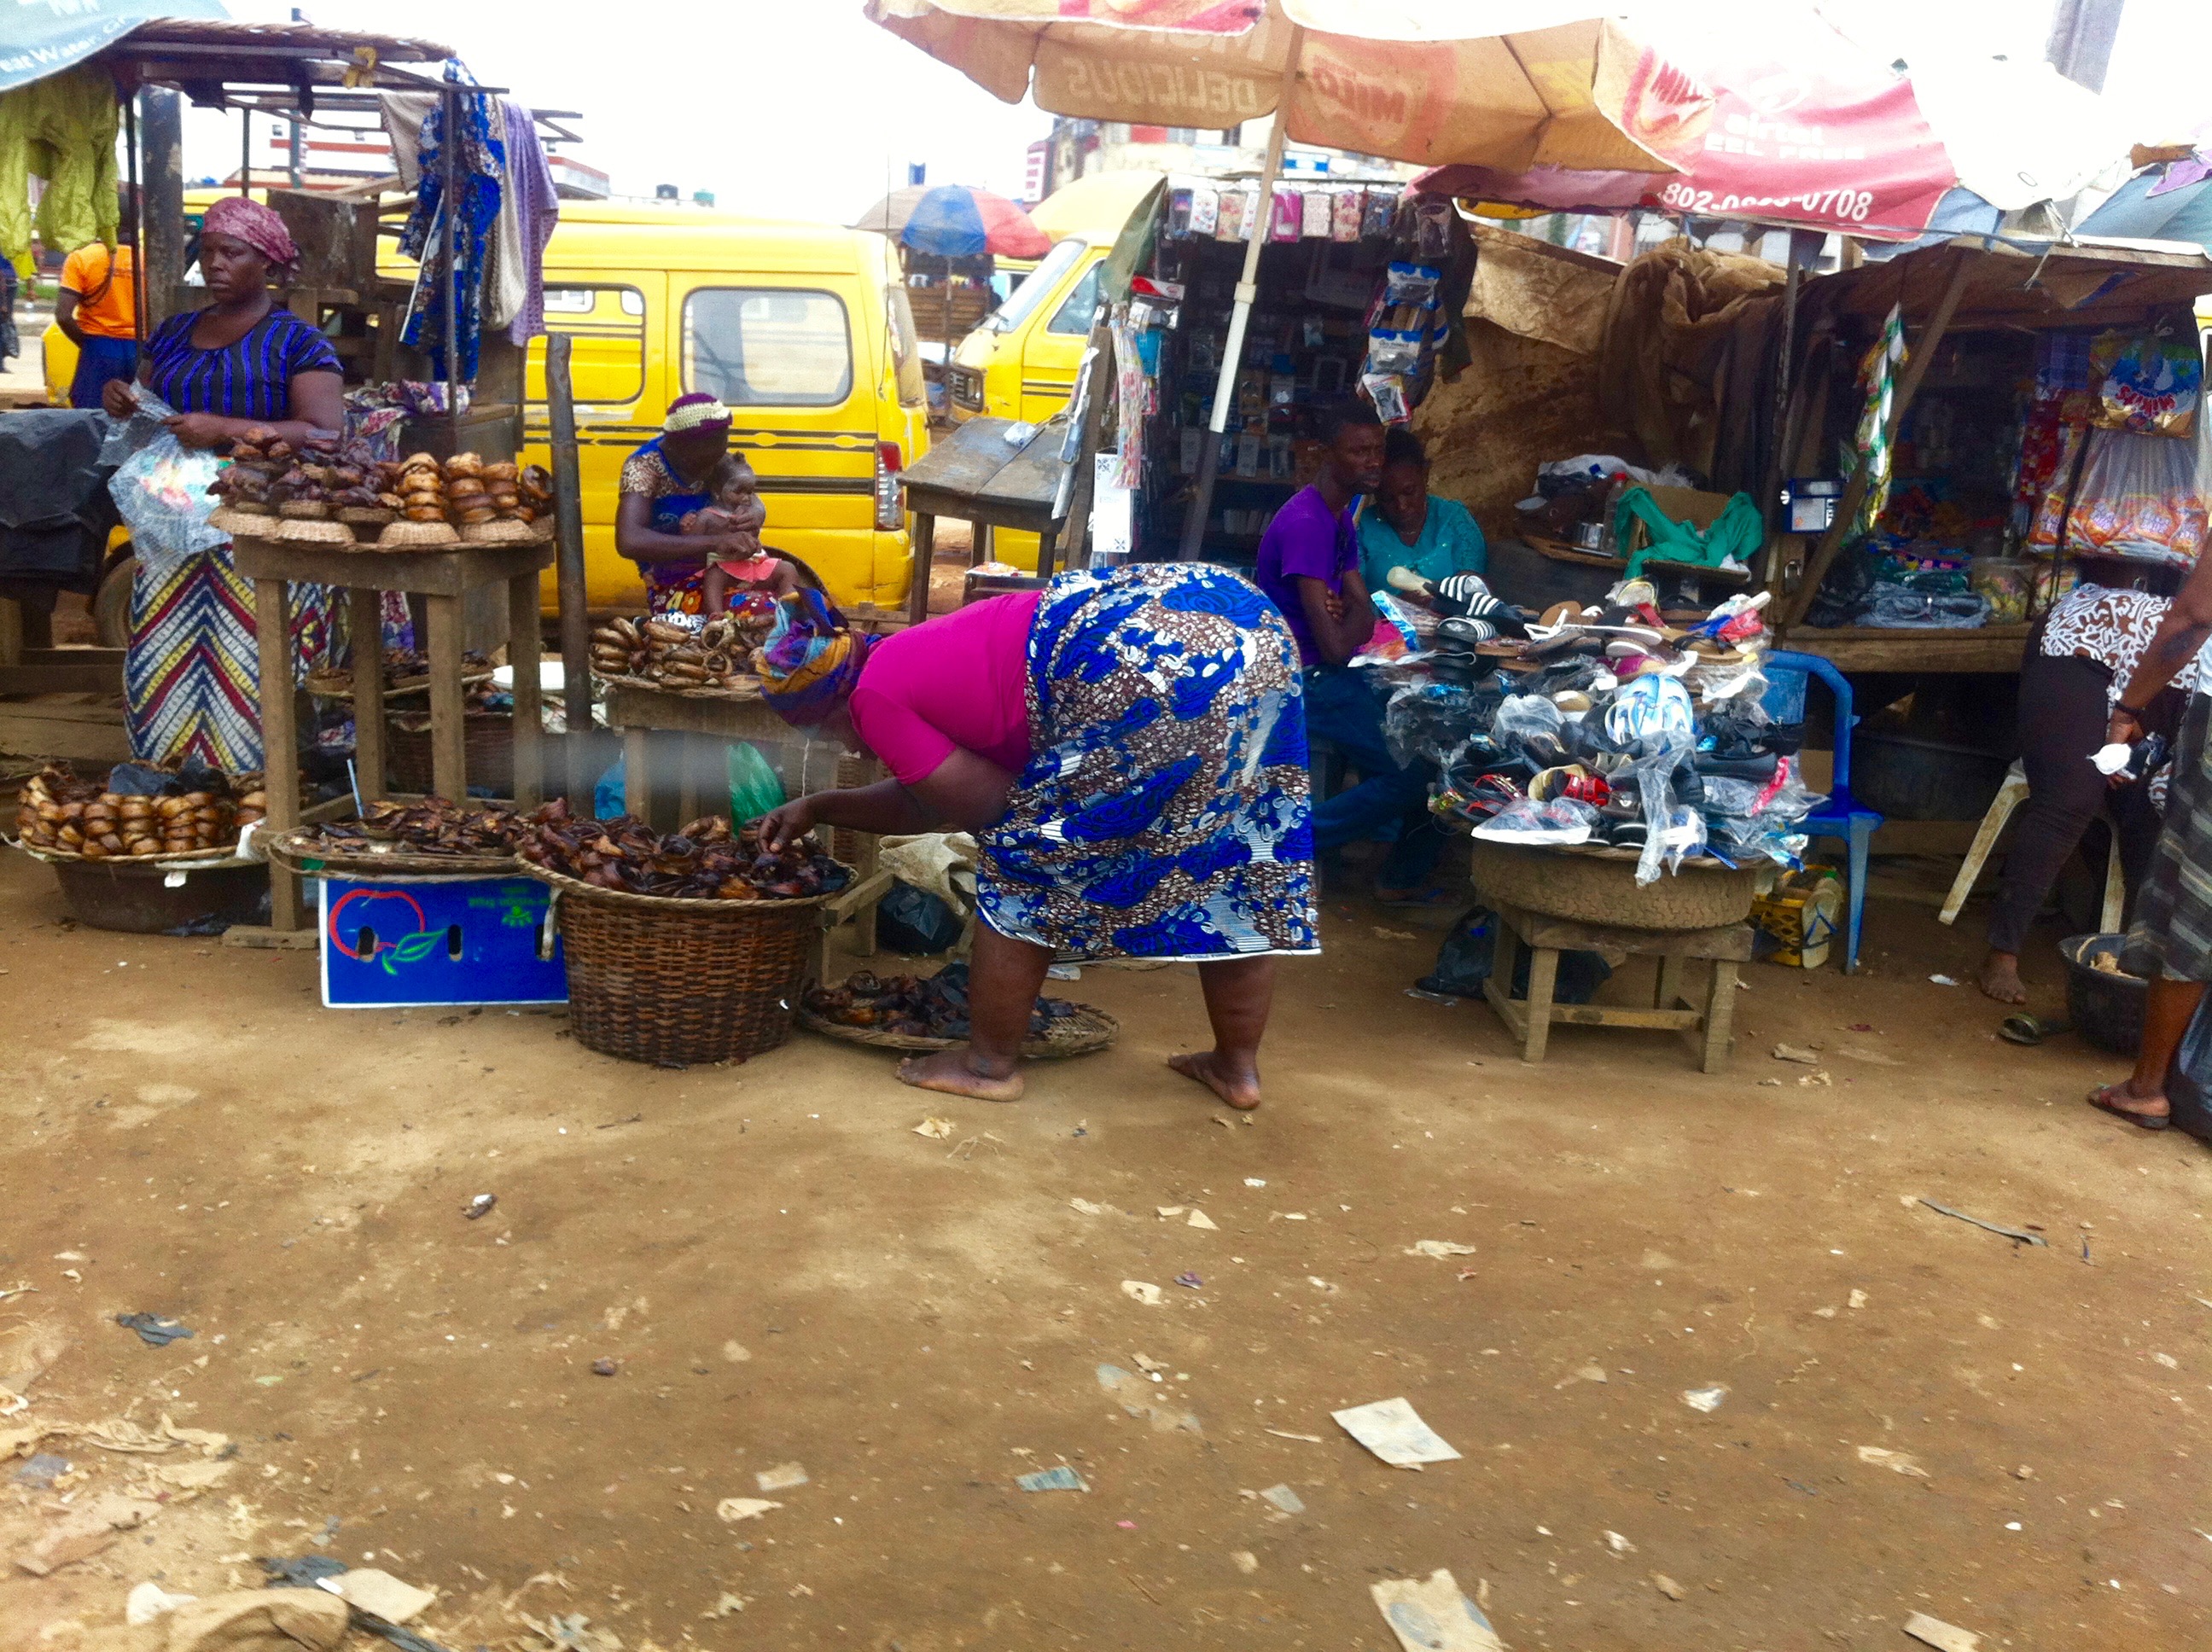 Street market scene in Lagos, Nigeria. (smoked fish)